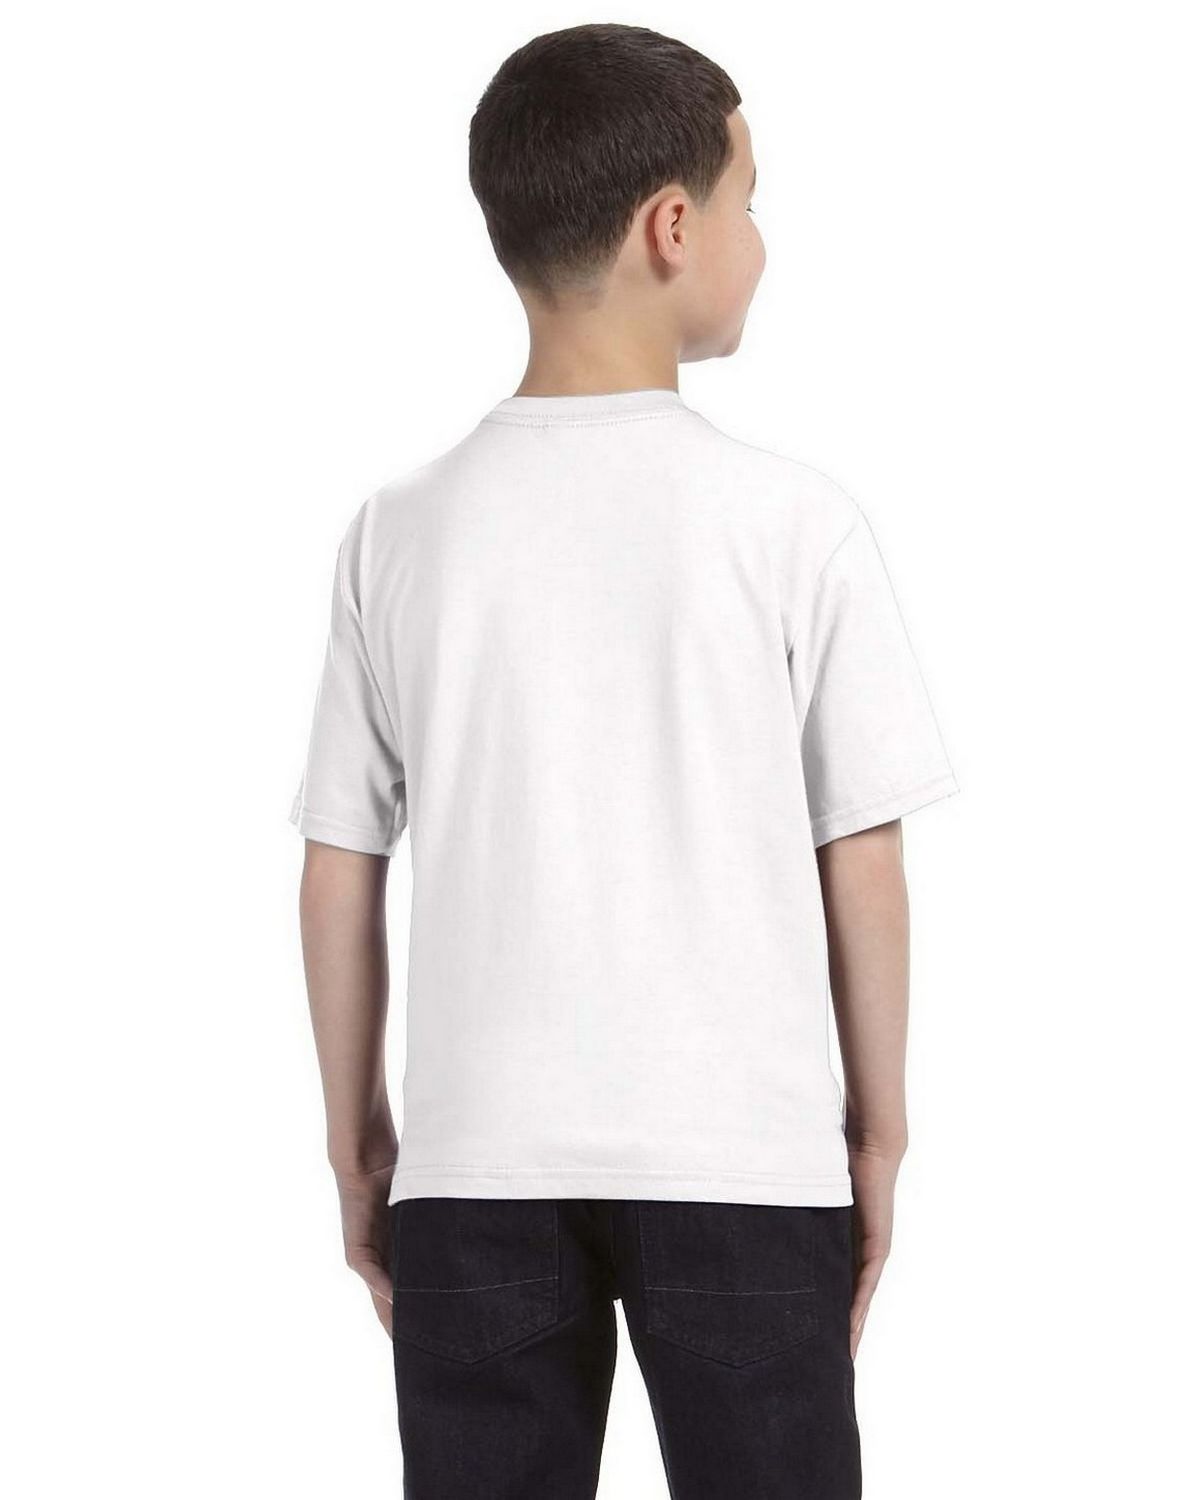 Reviews about Anvil 990B Youth Ringspun Cotton Fashion Fit T-Shirt